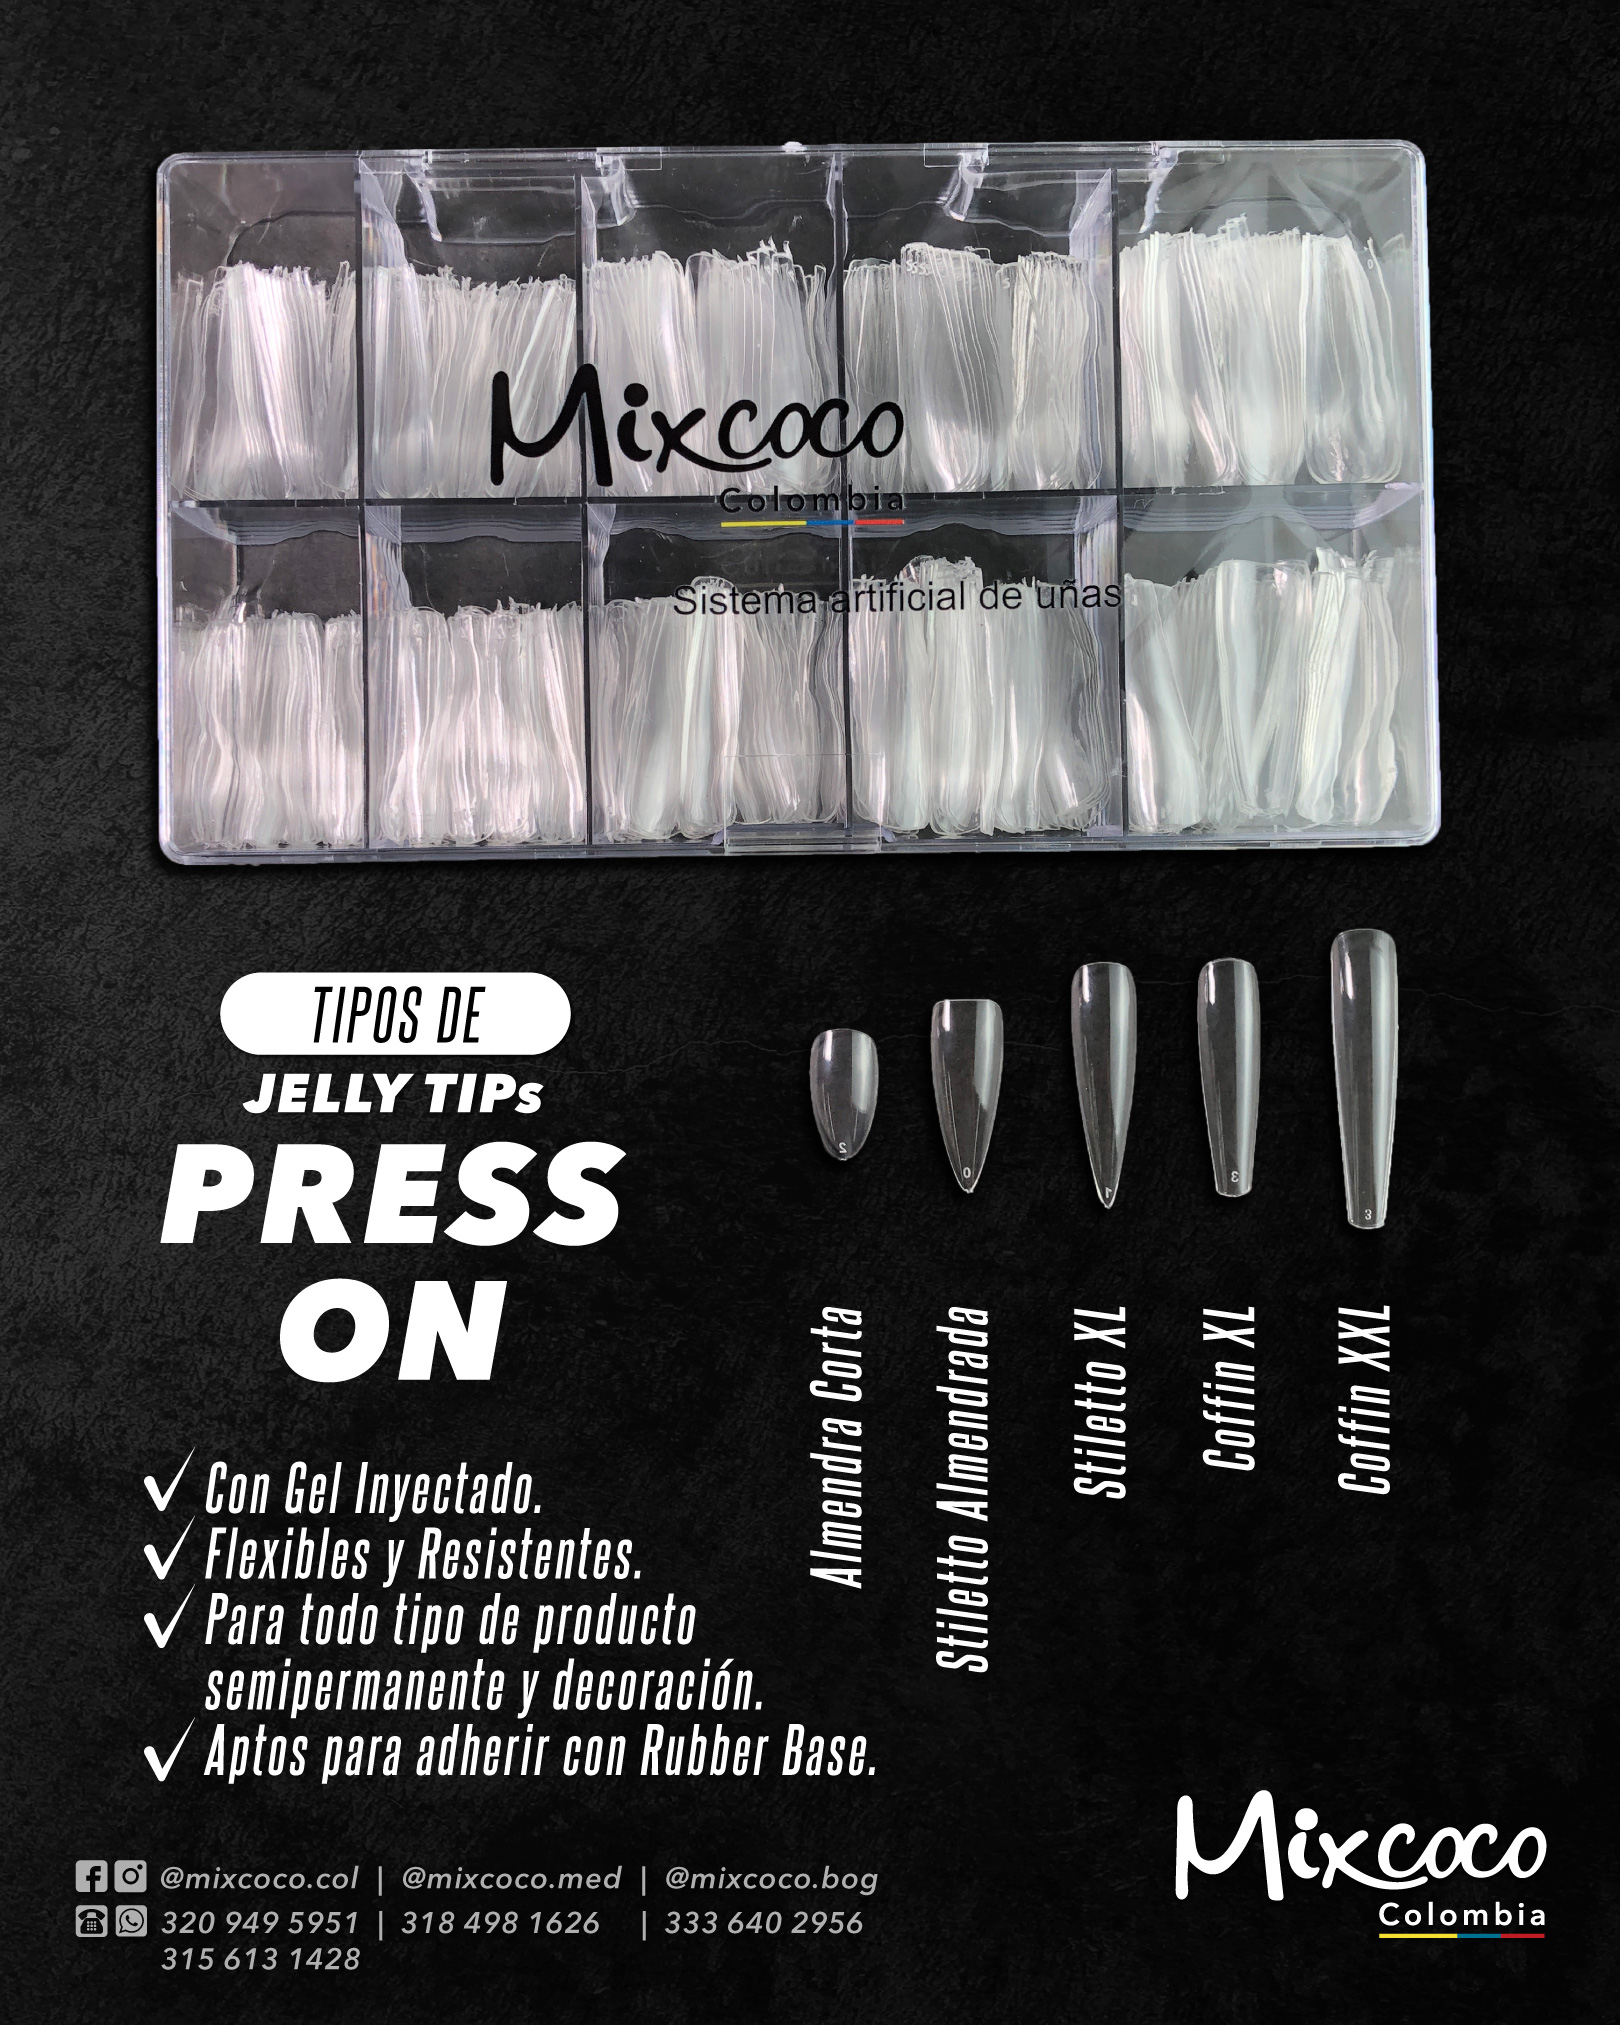 PRESS ON MIXCOCO